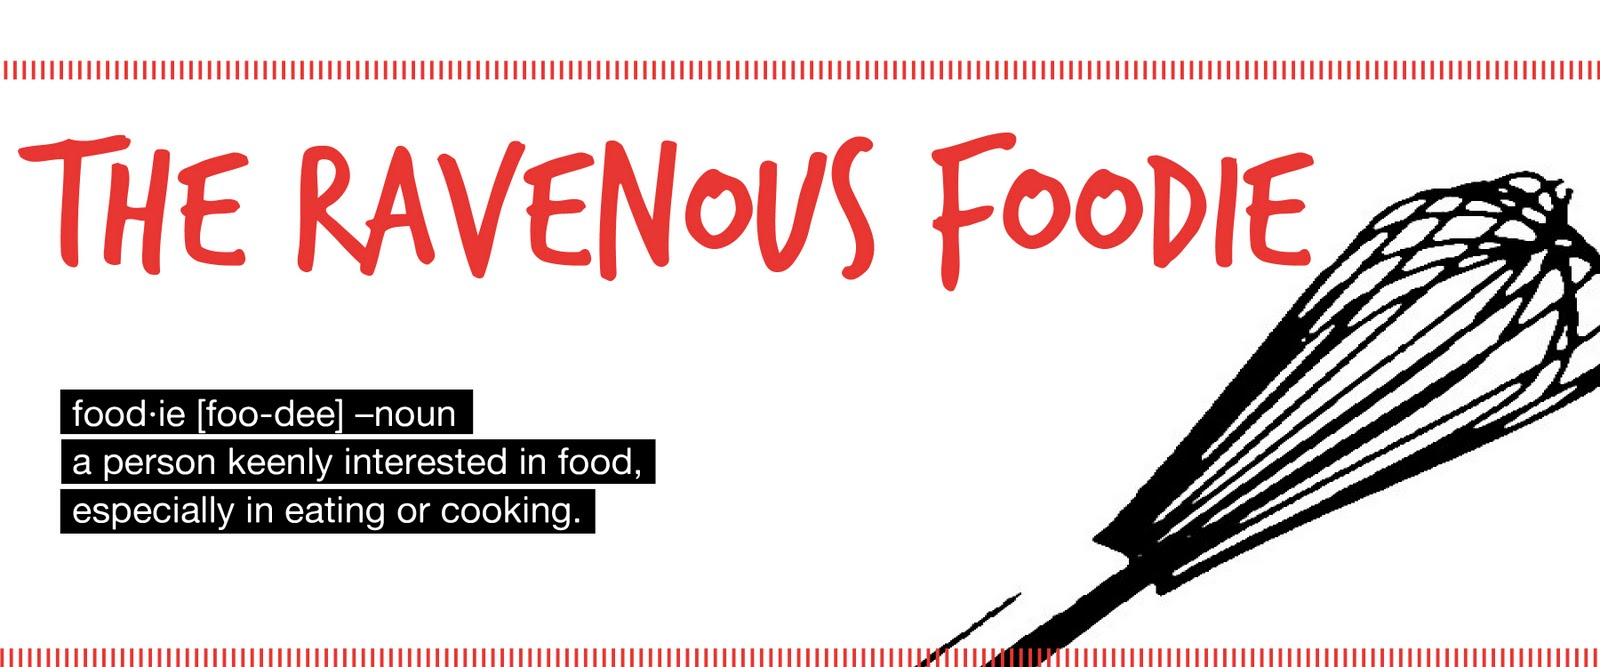 The Ravenous Foodie